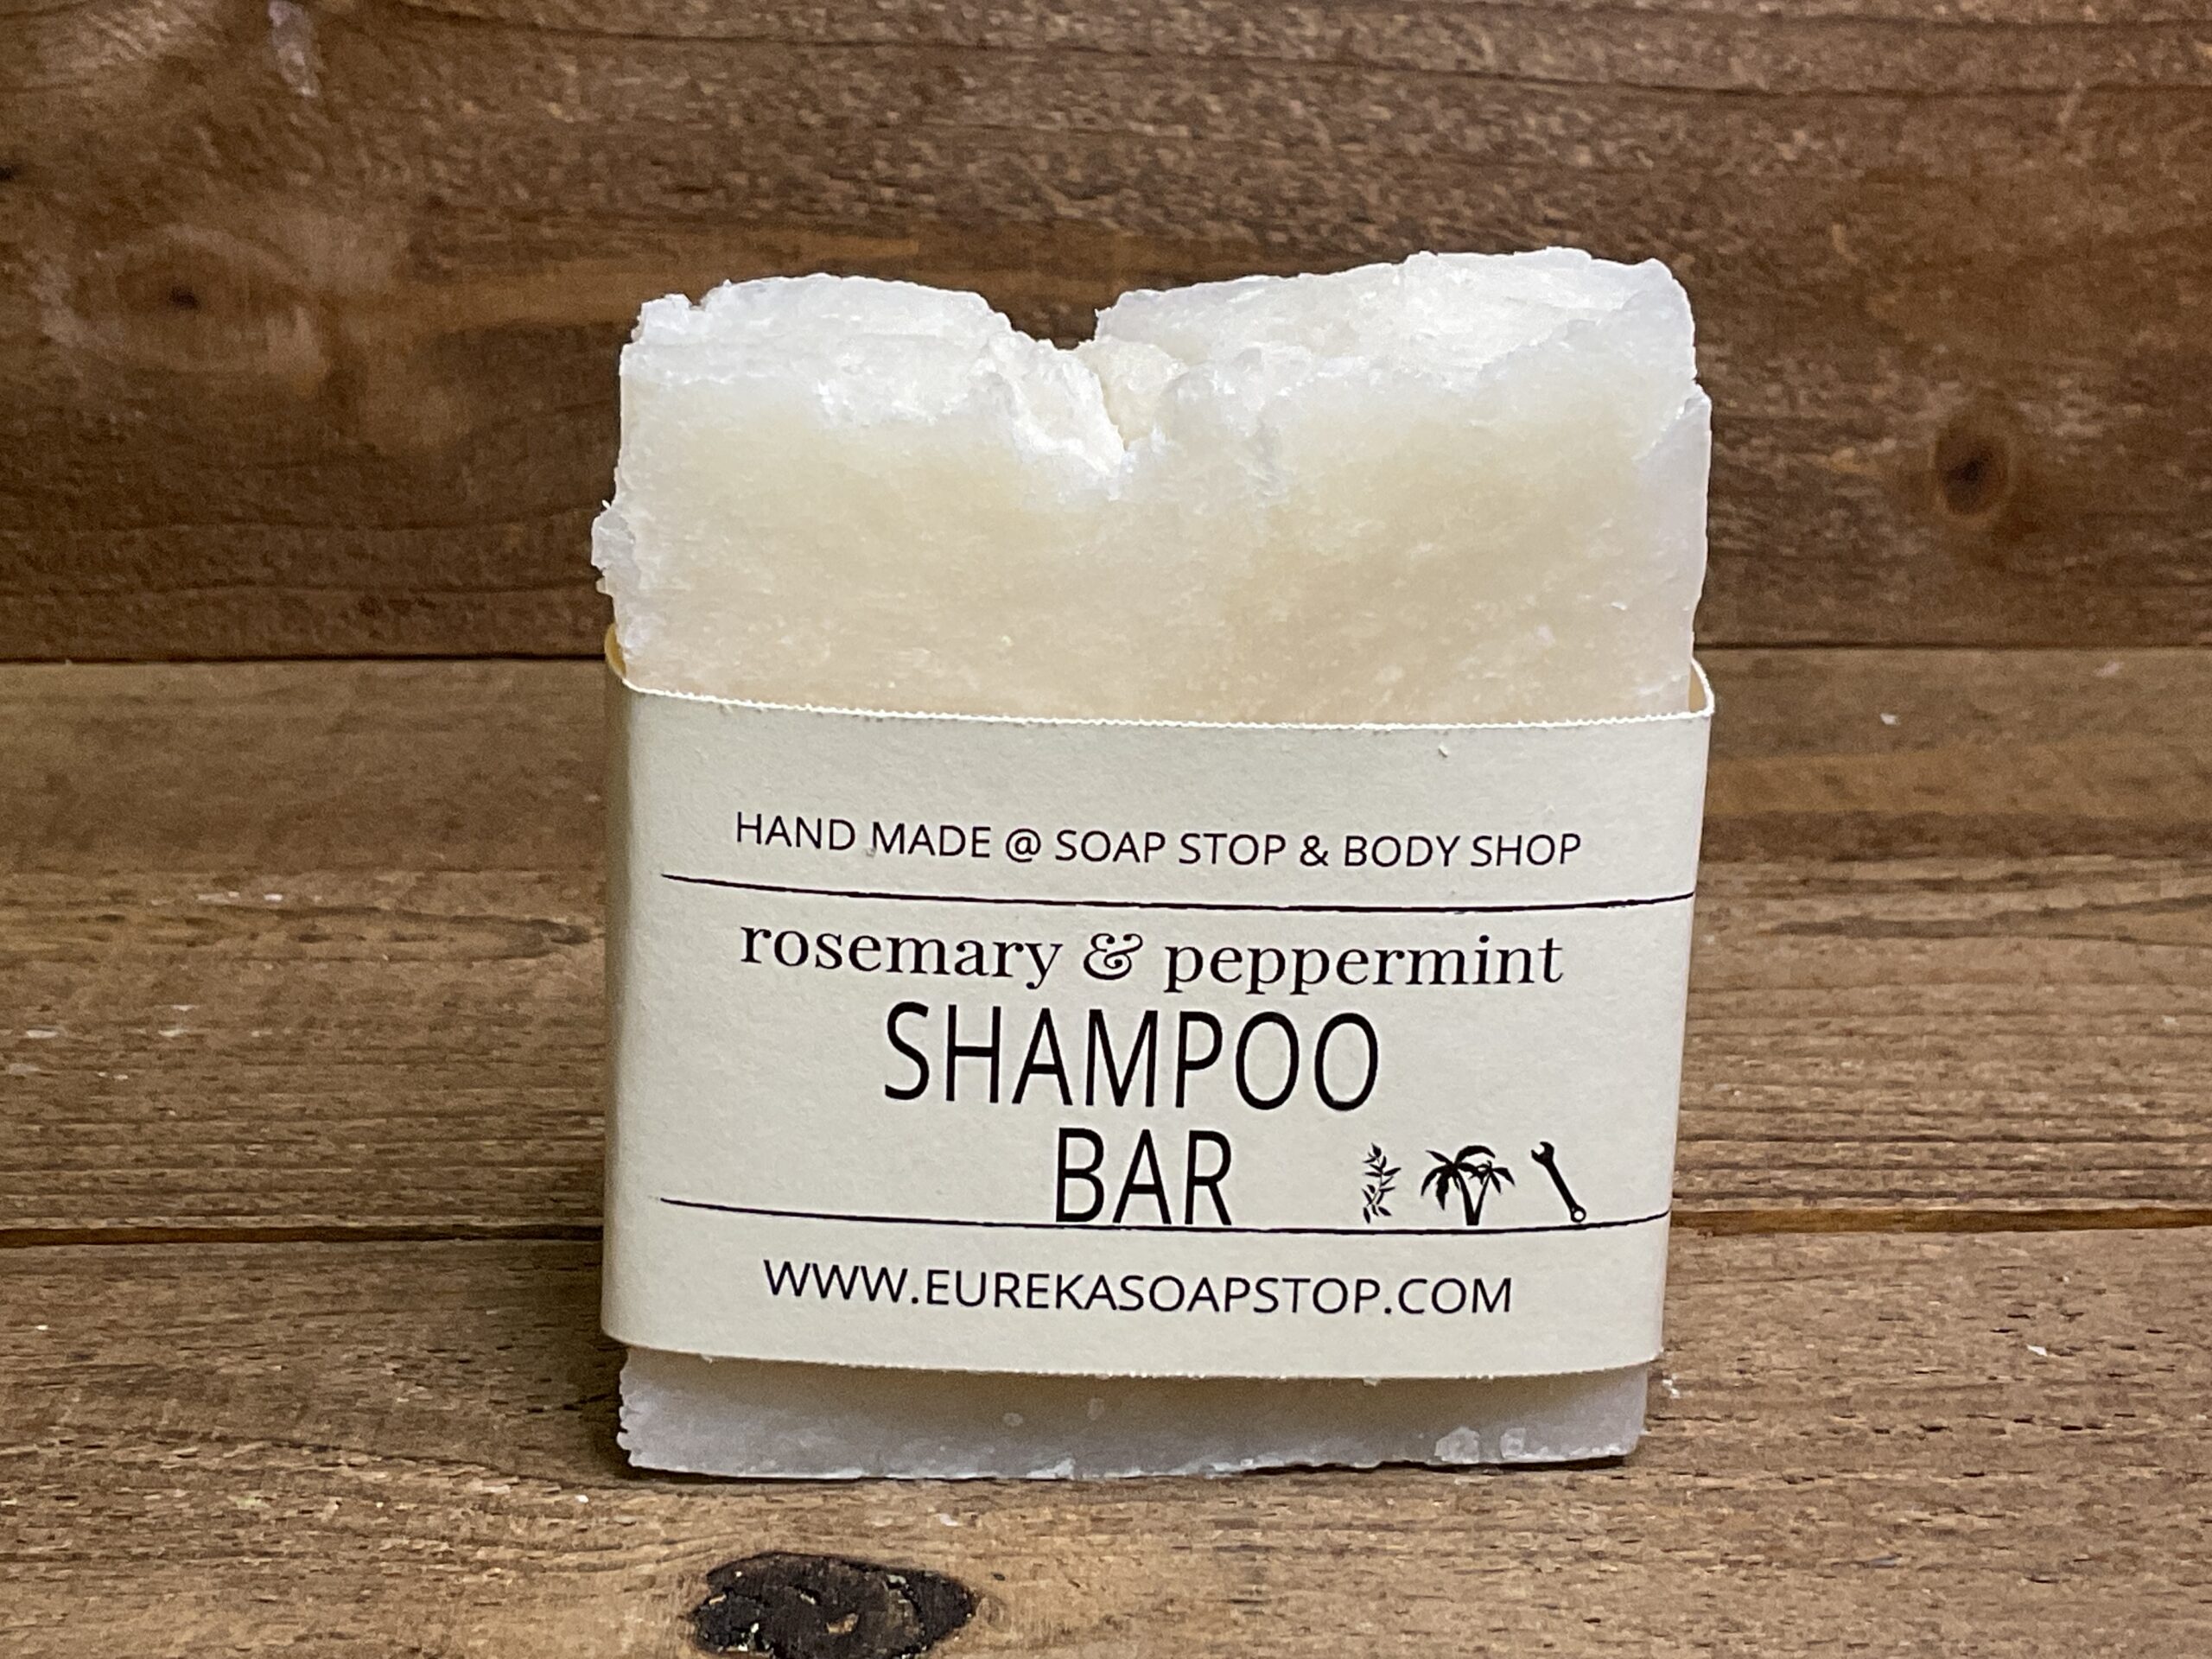 Peppermint Shampoo Bar